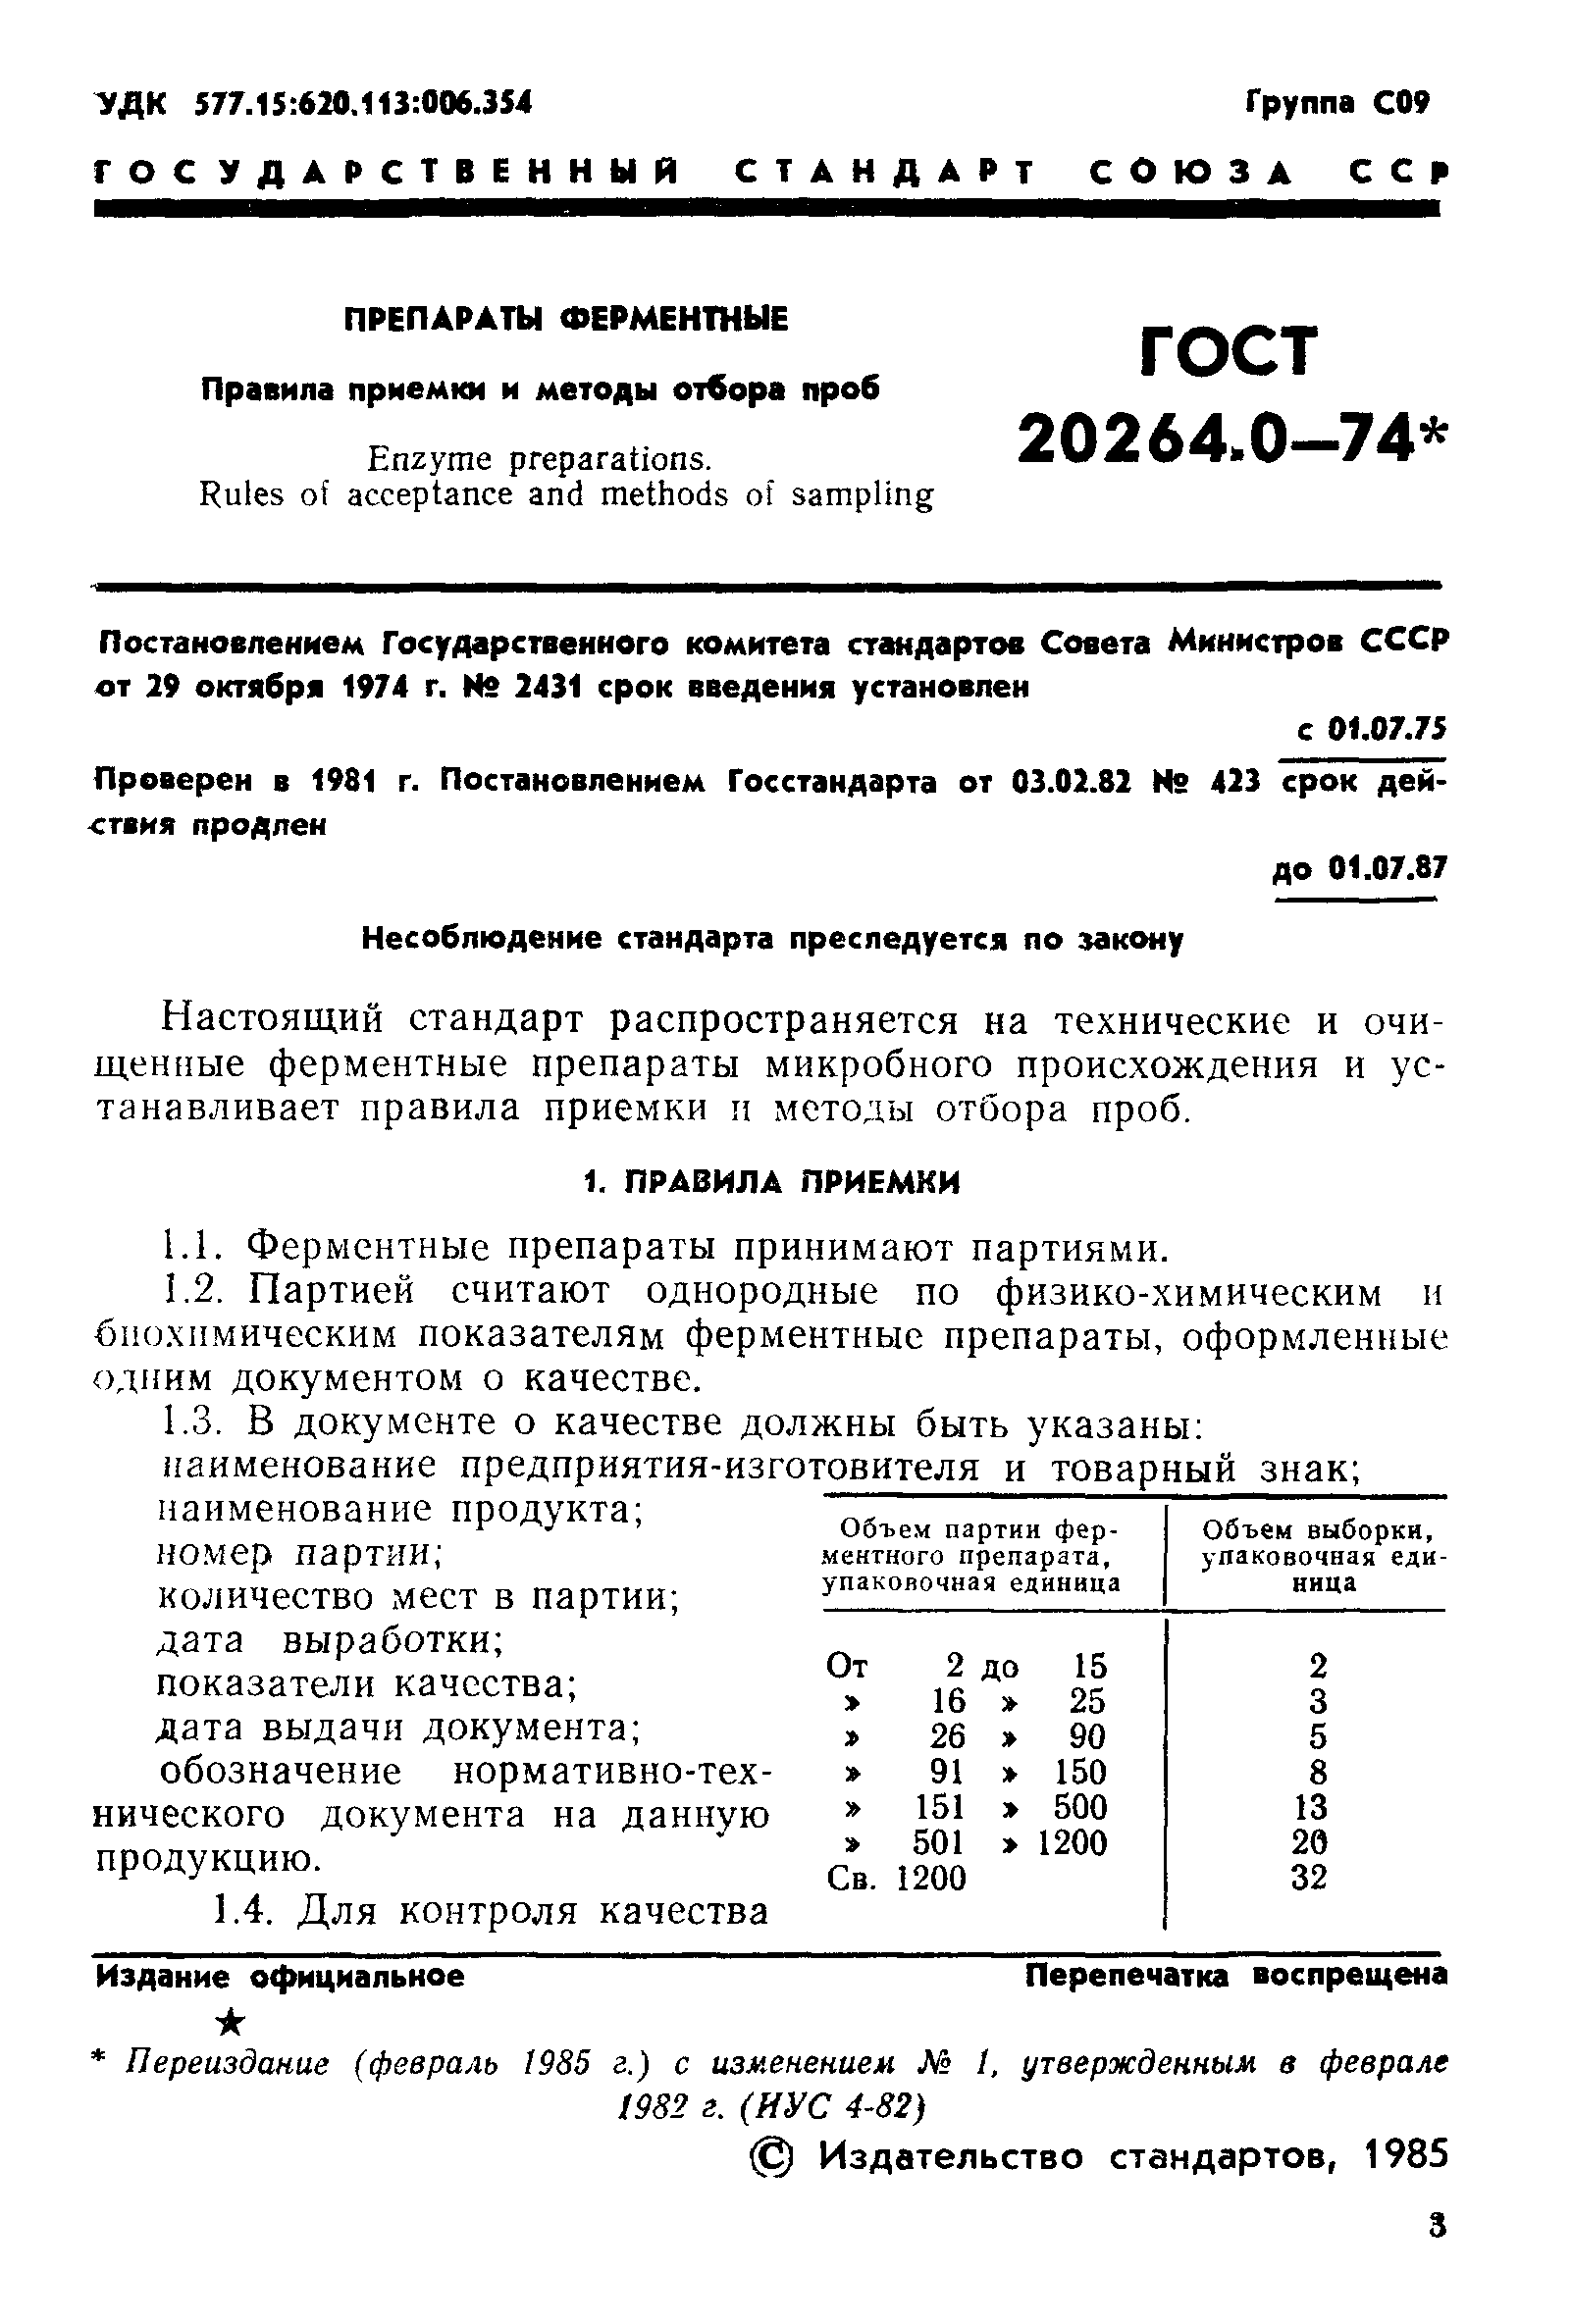 ГОСТ 20264.0-74